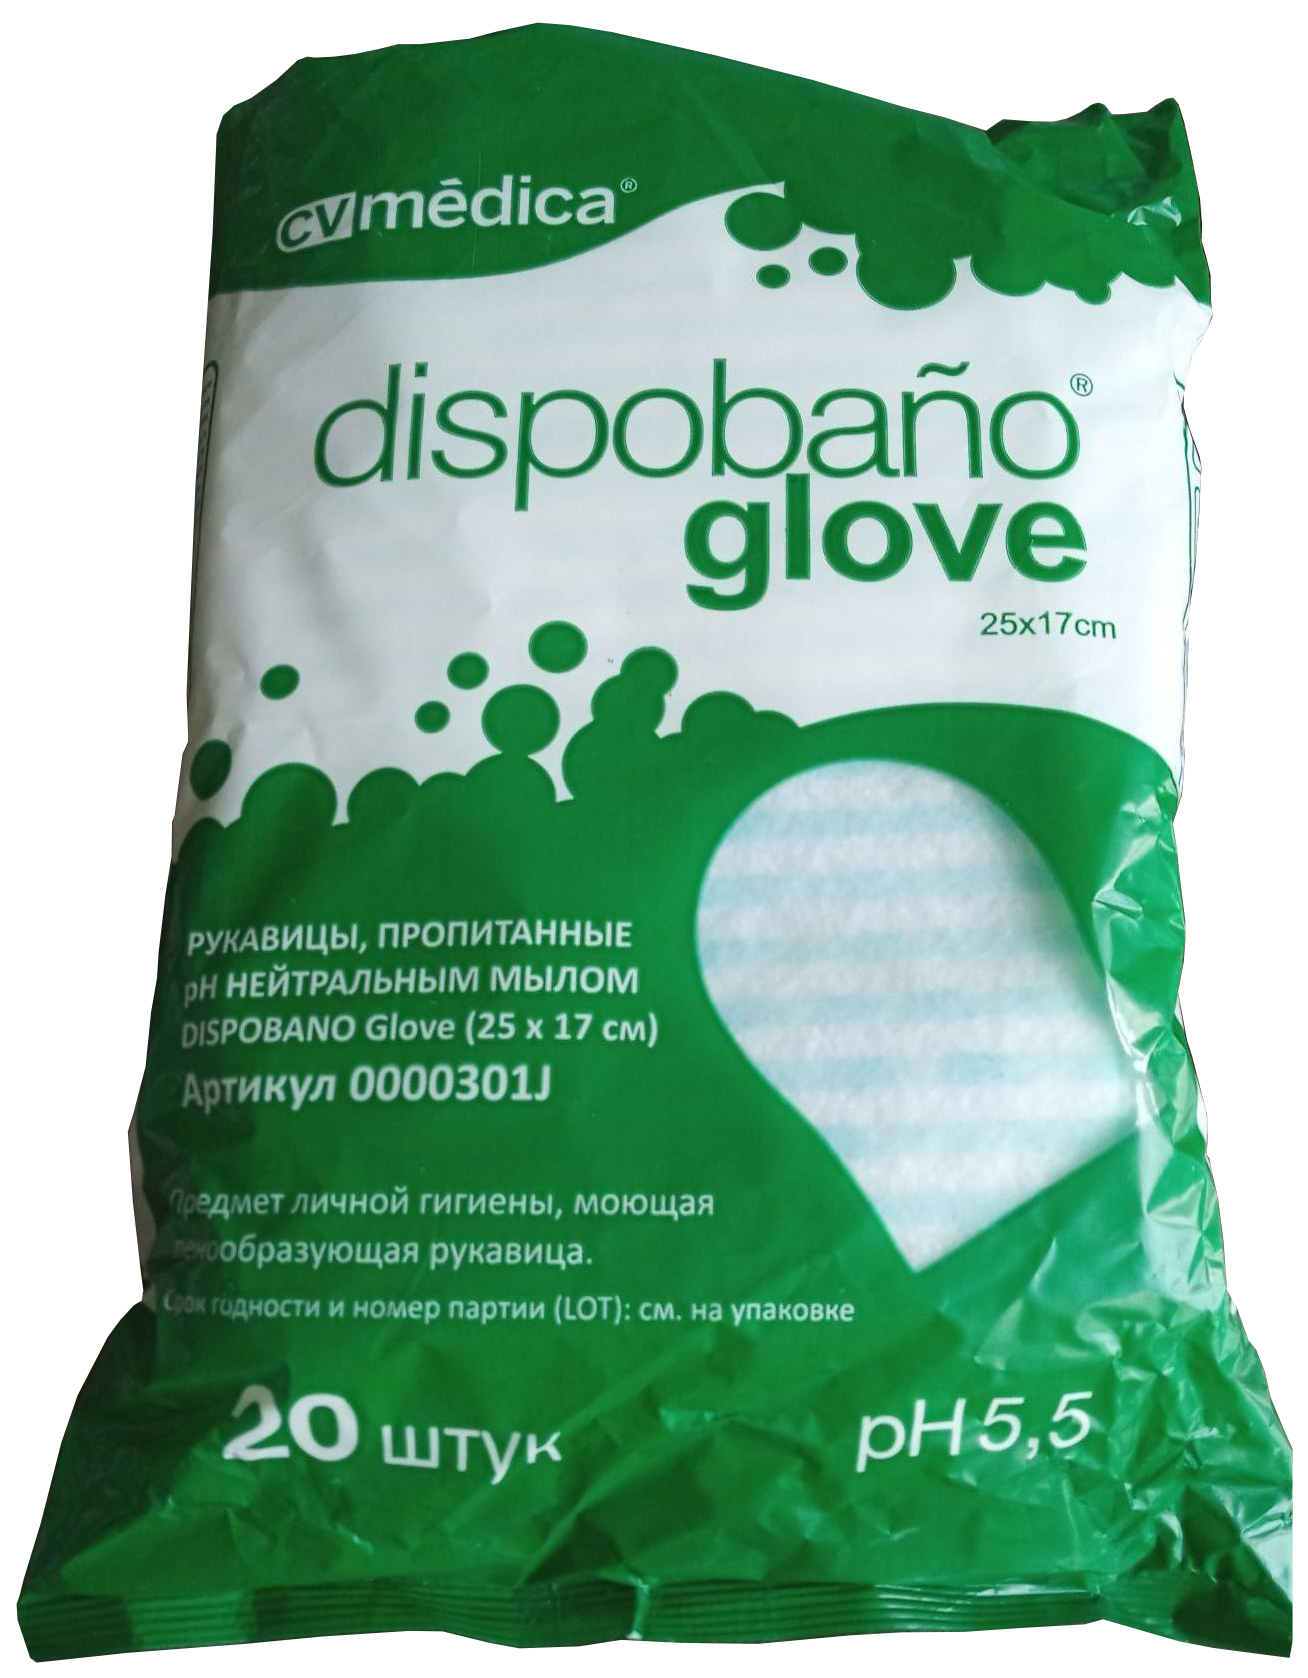 фото Пенообразующая рукавица cv medica dispobano glove 20 шт.